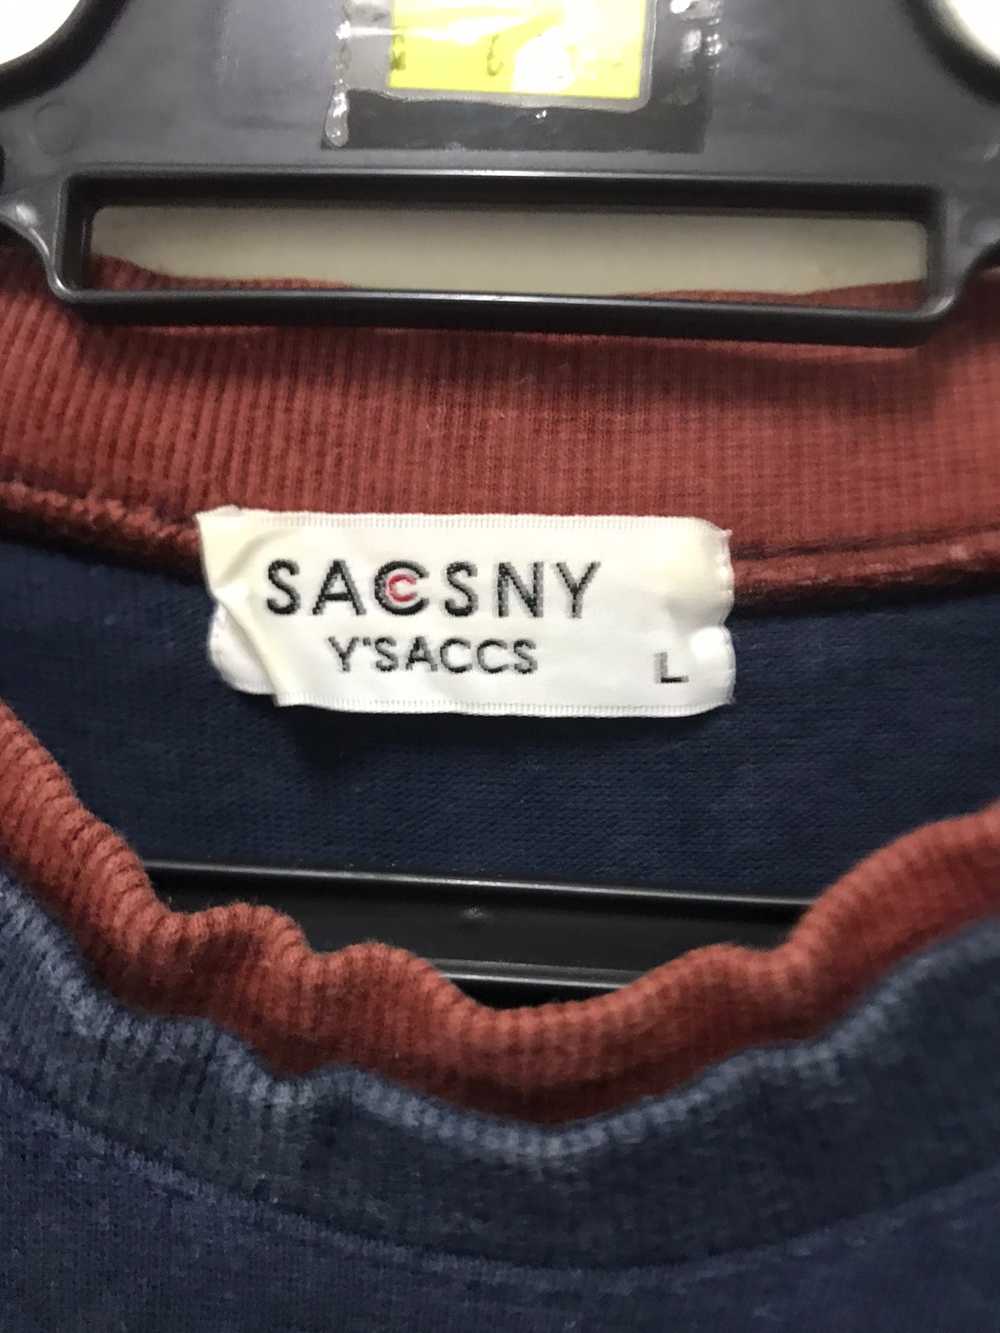 Yohji Yamamoto Vintage Sacsny Ysaccs Shirt - image 4